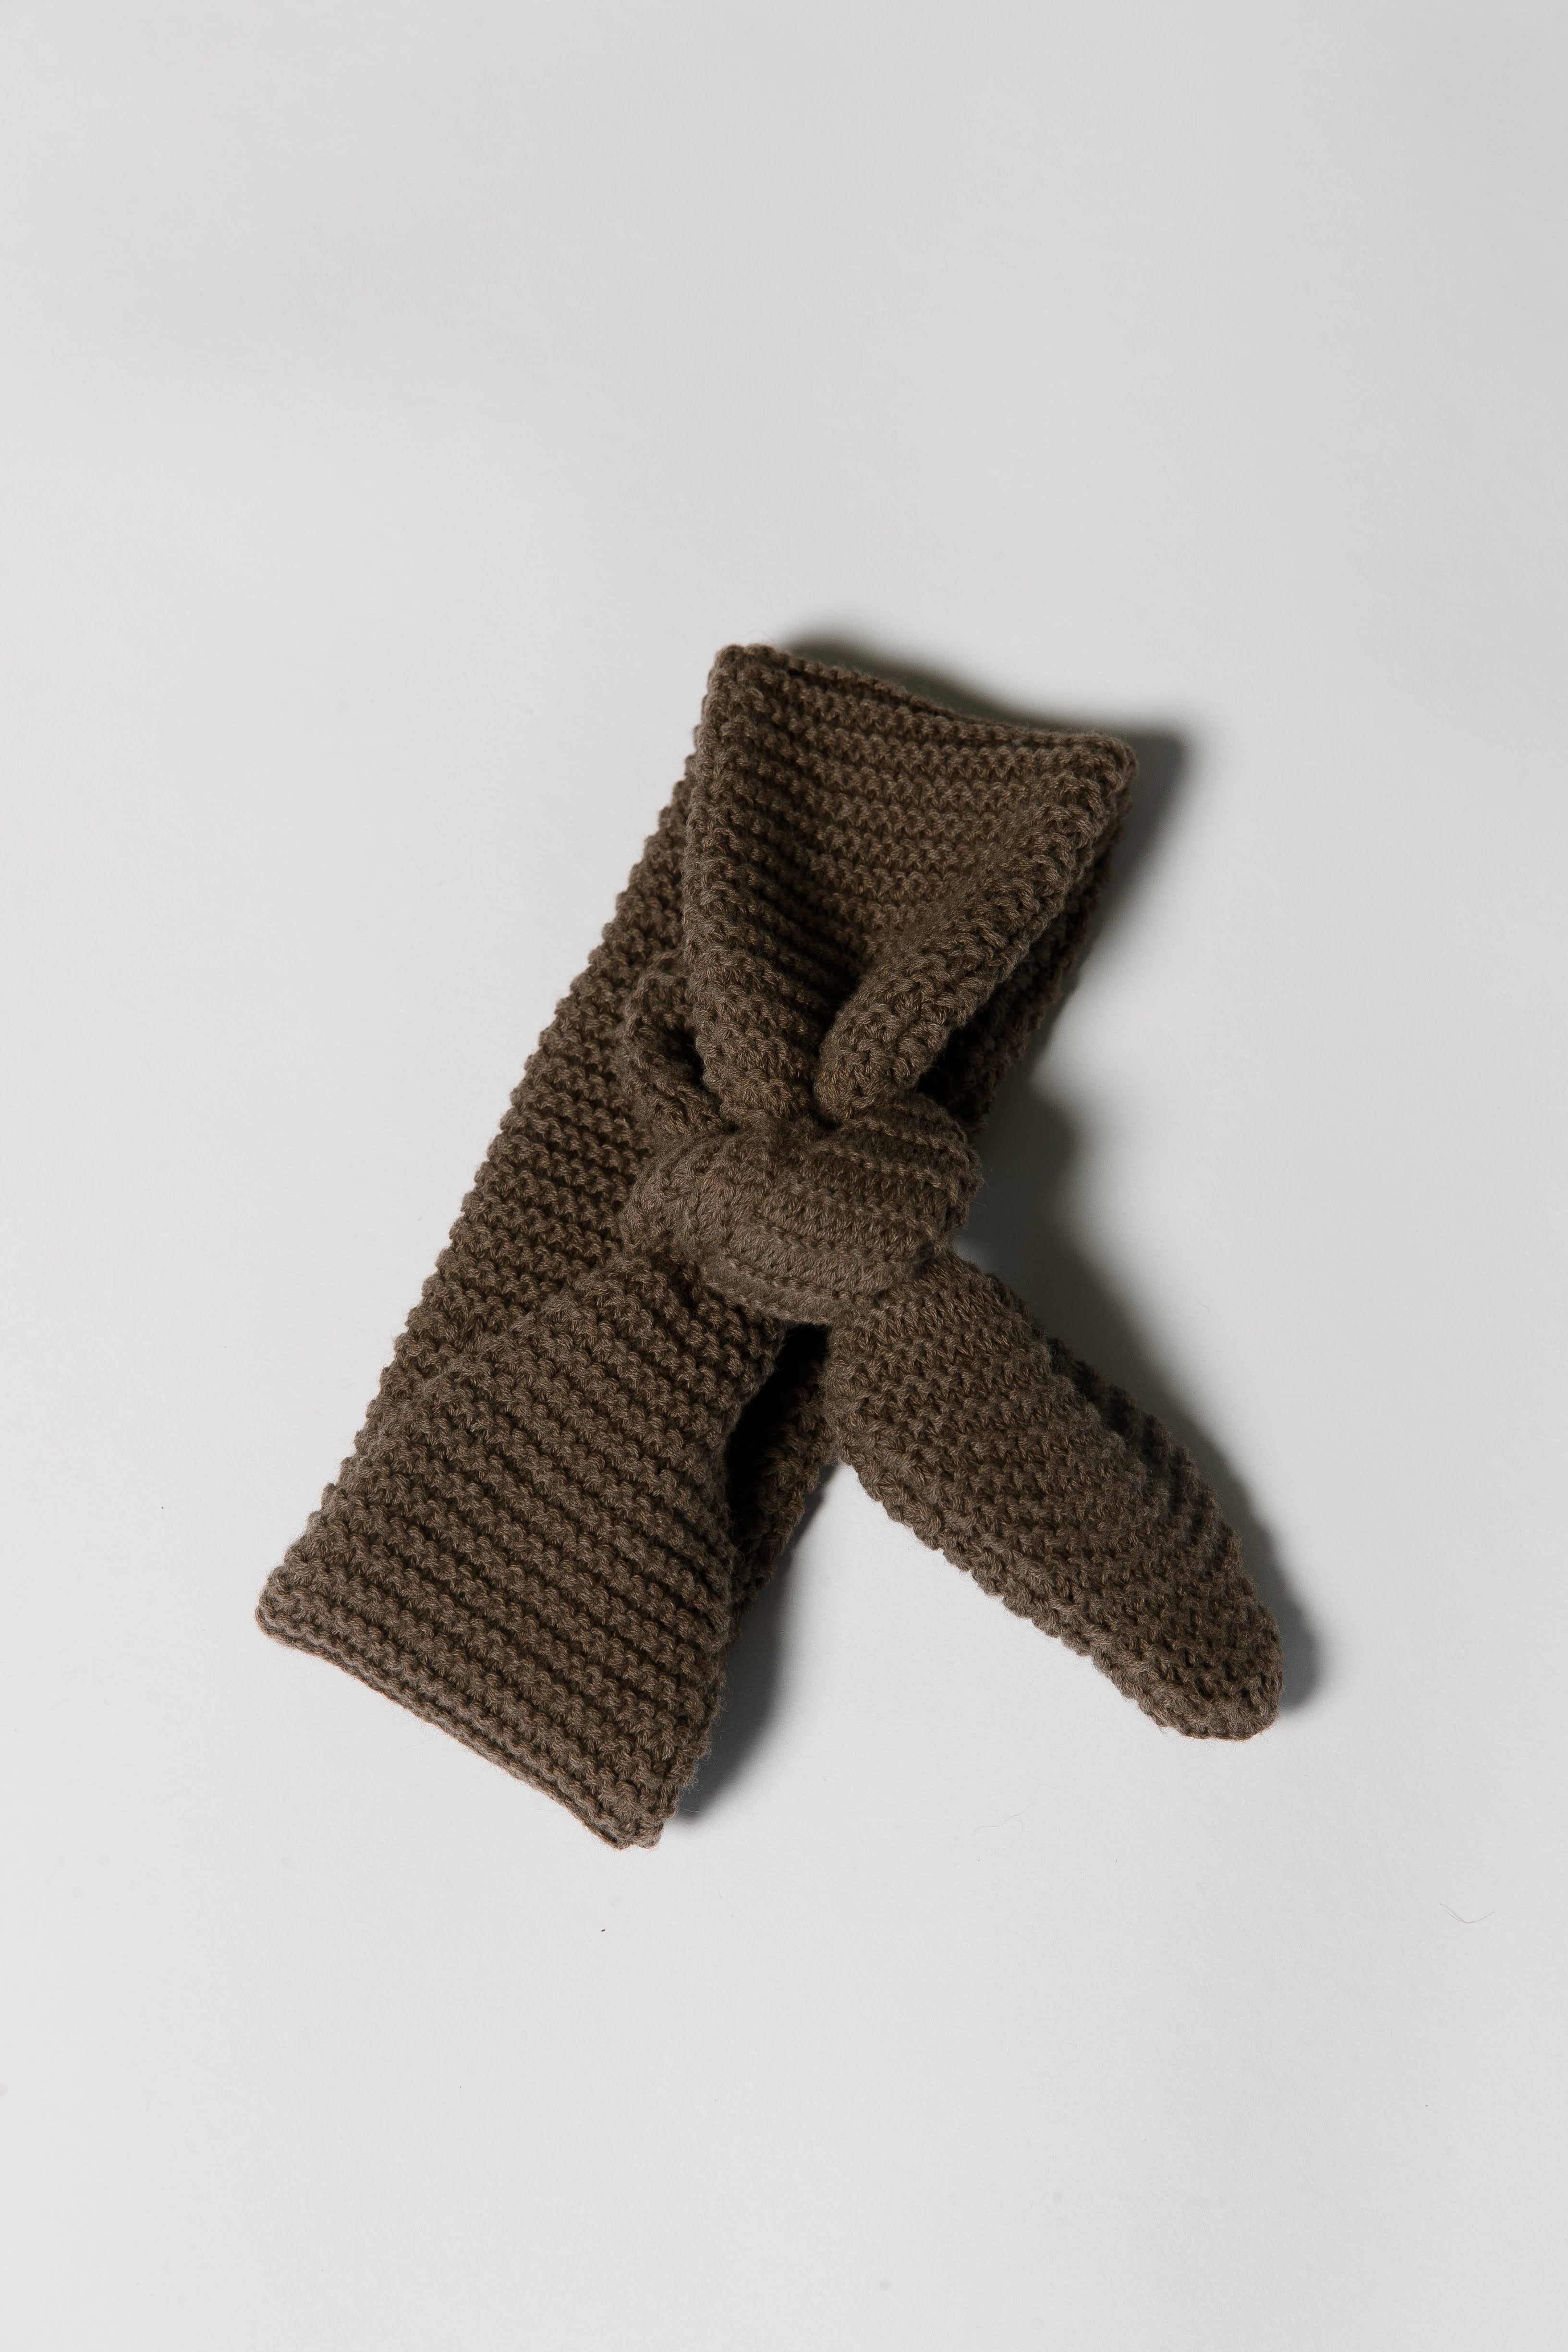 Knit Top Knot (Truffle)